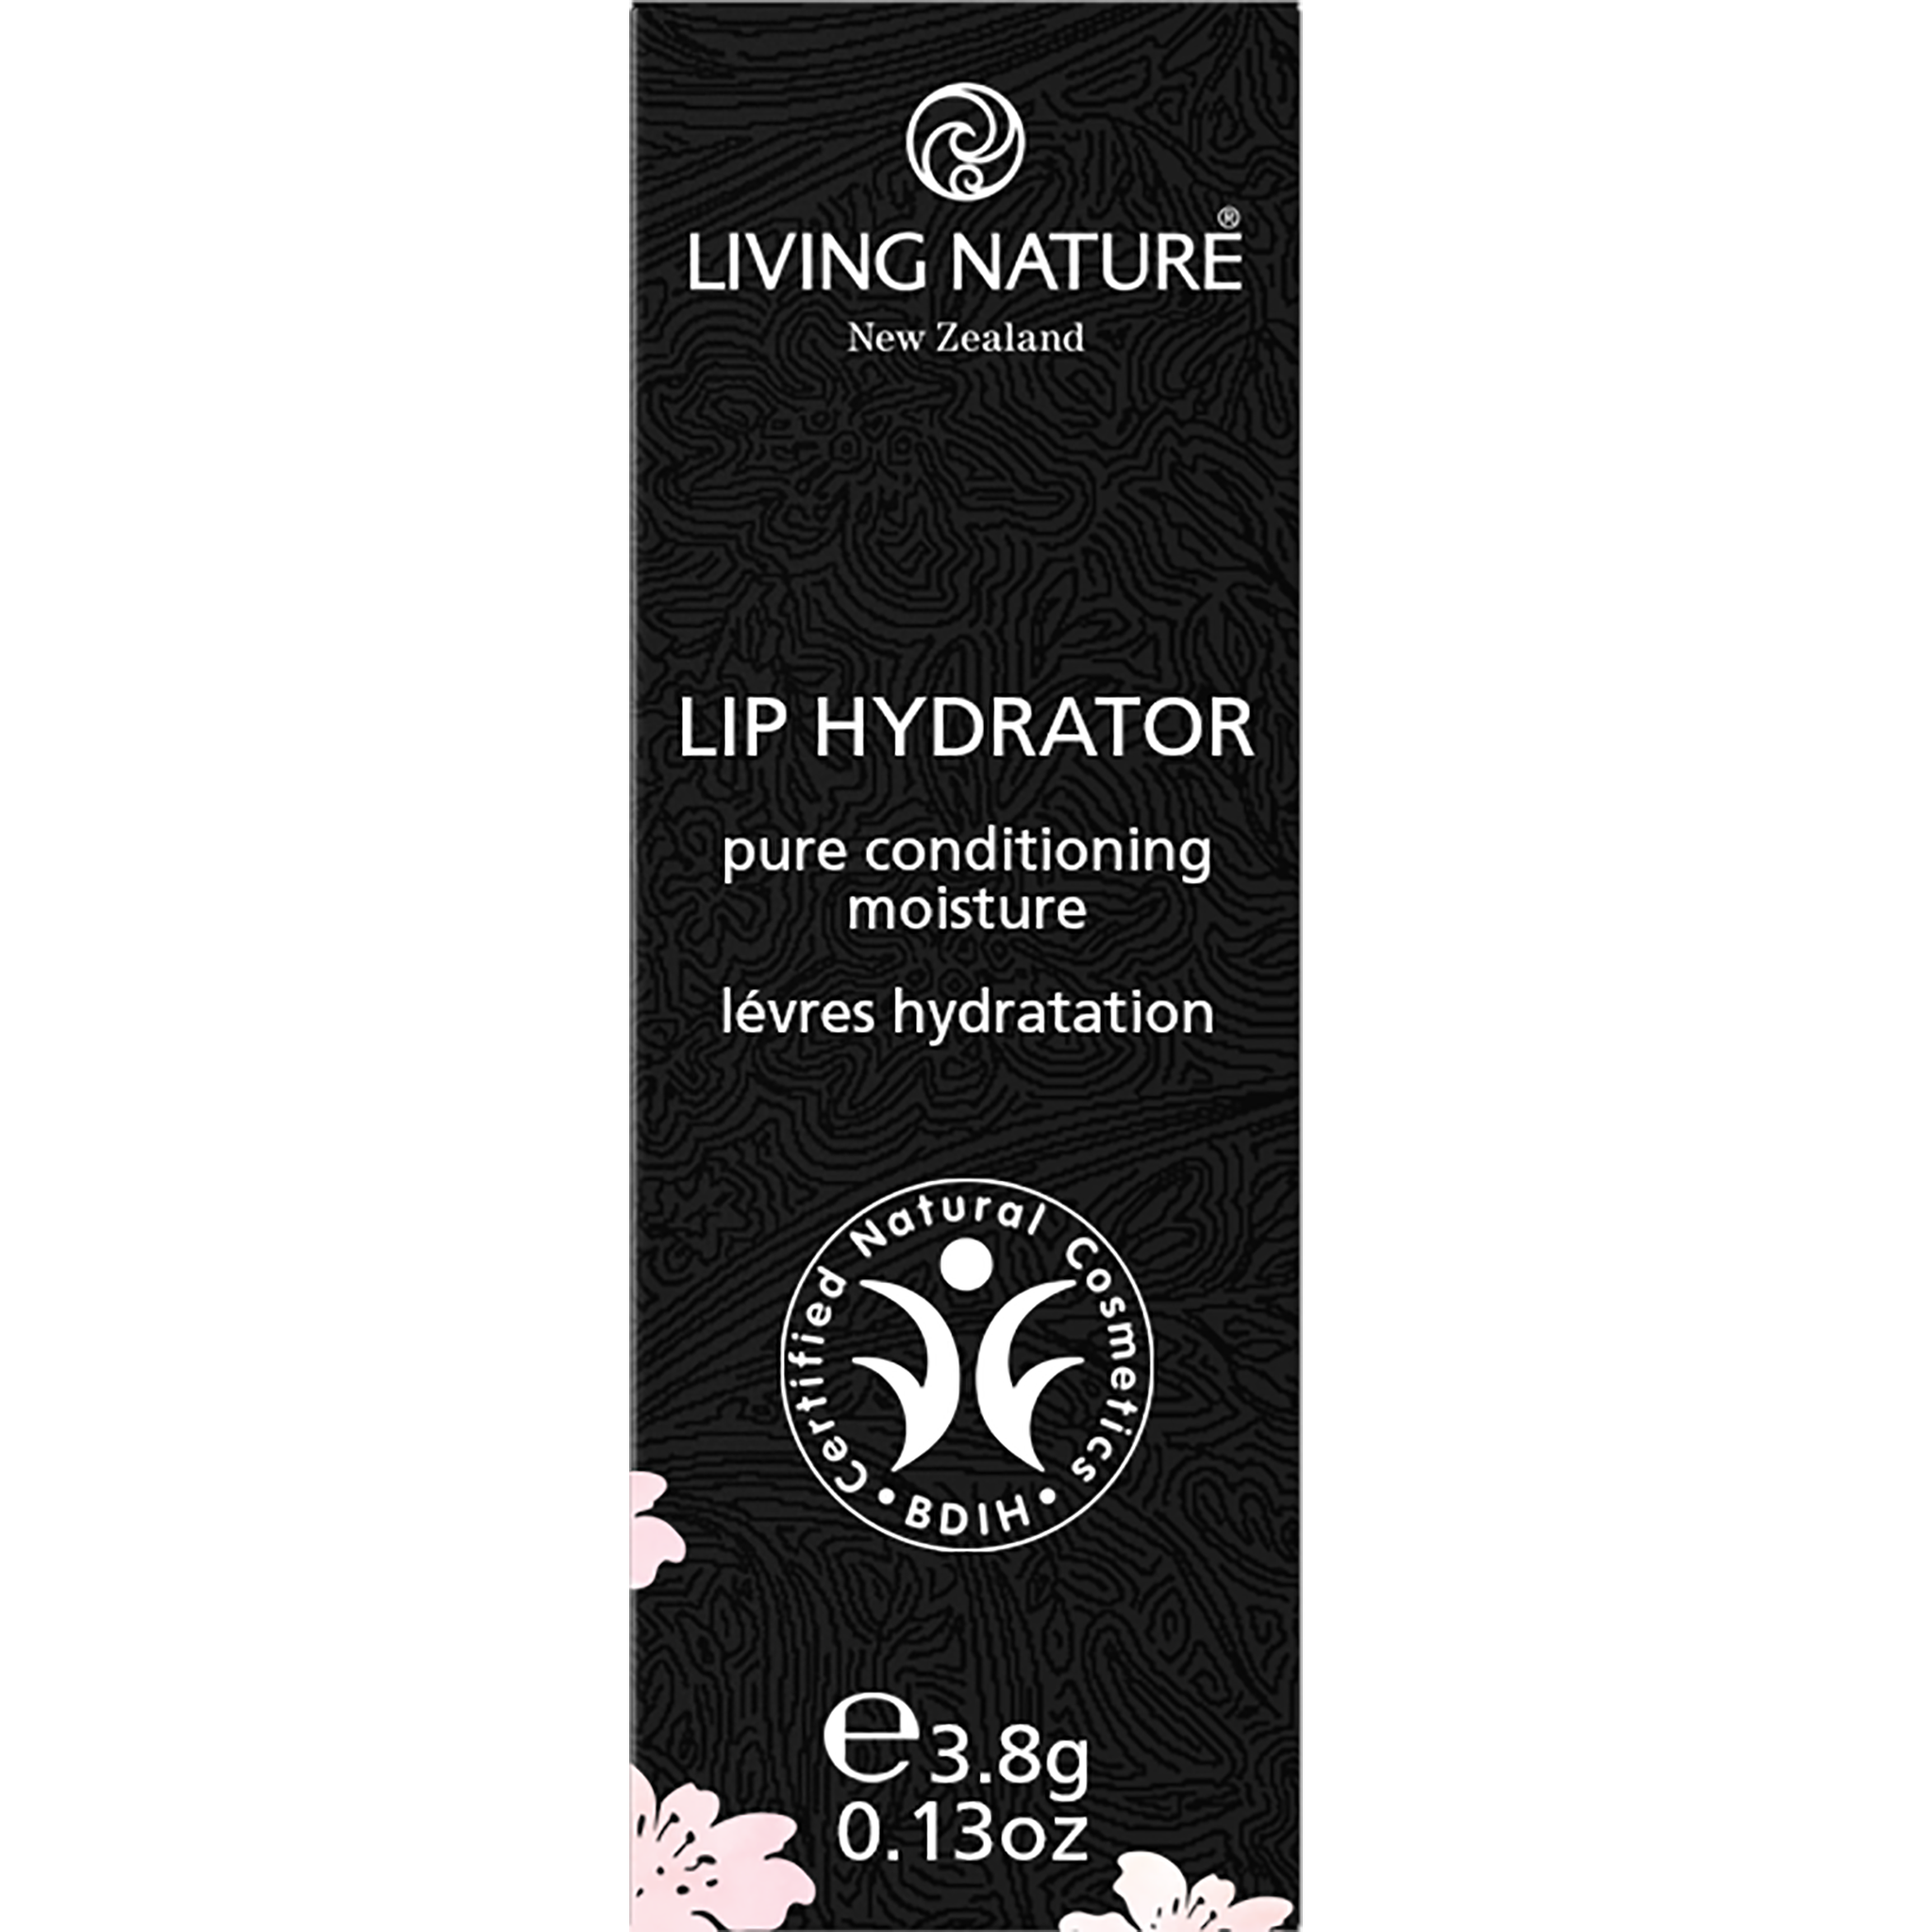 Lip Hydrator